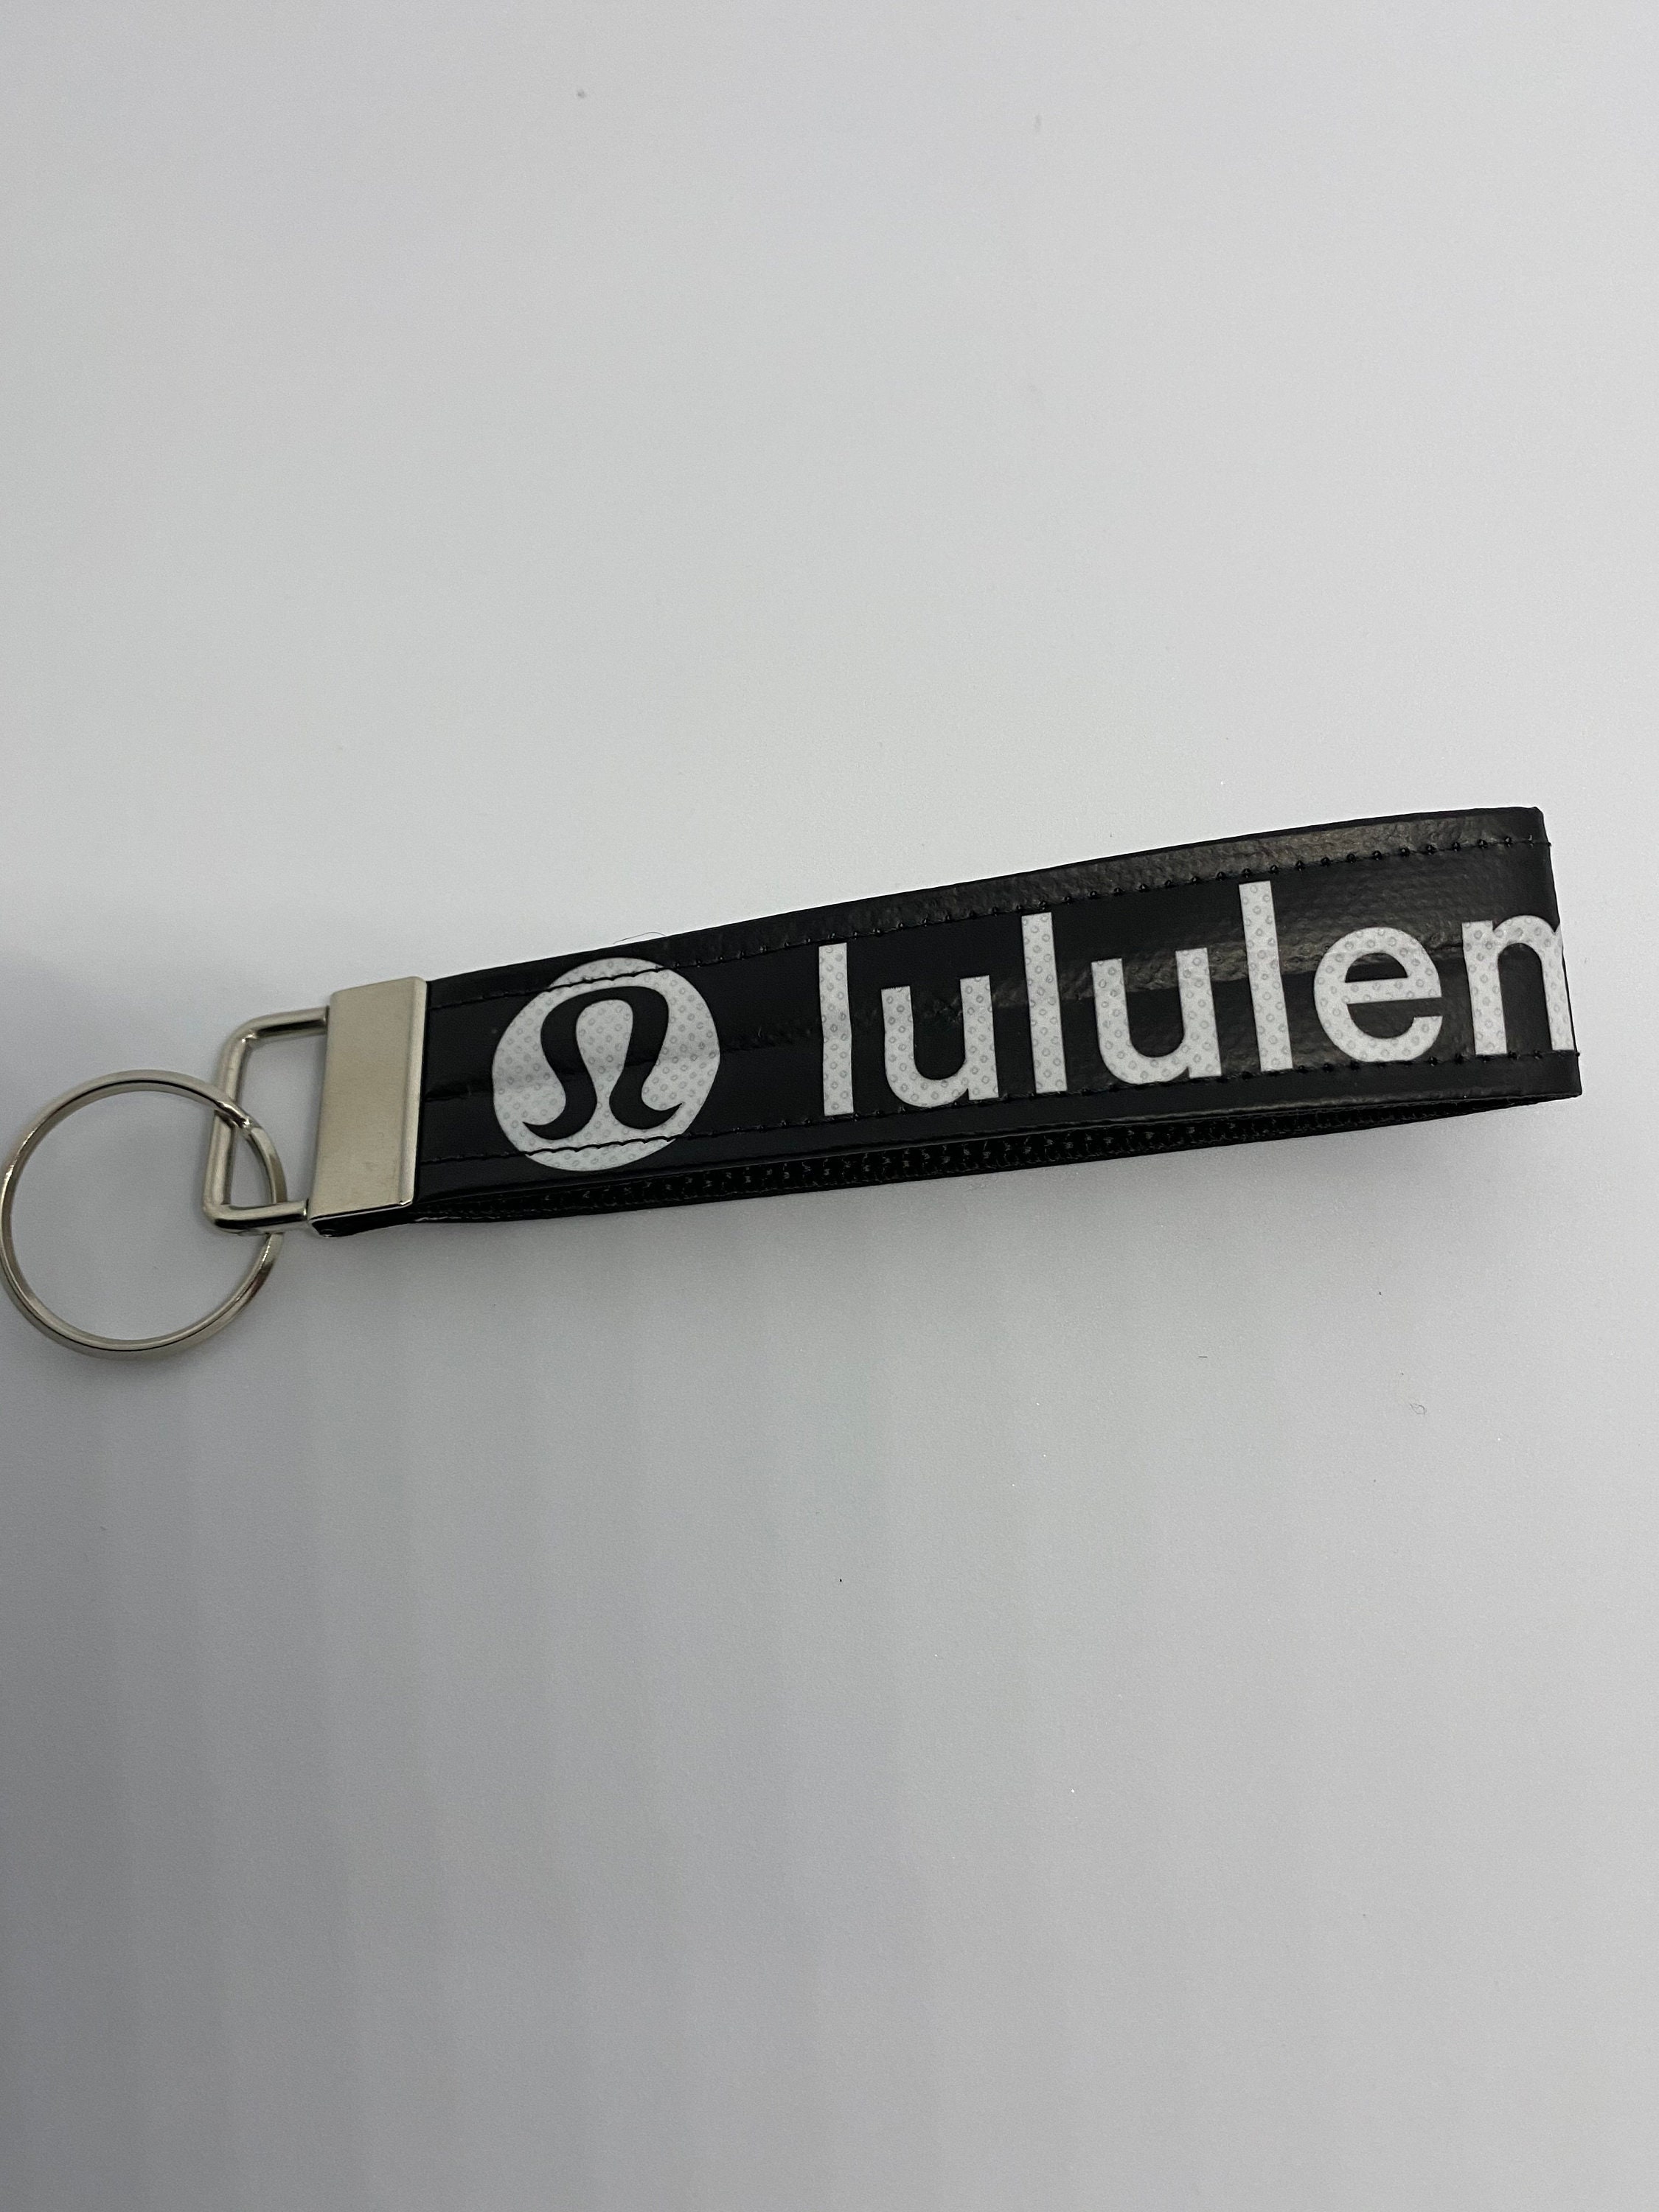 Lululemon Never Lost Key Chain - Black / Super Dark - lulu fanatics